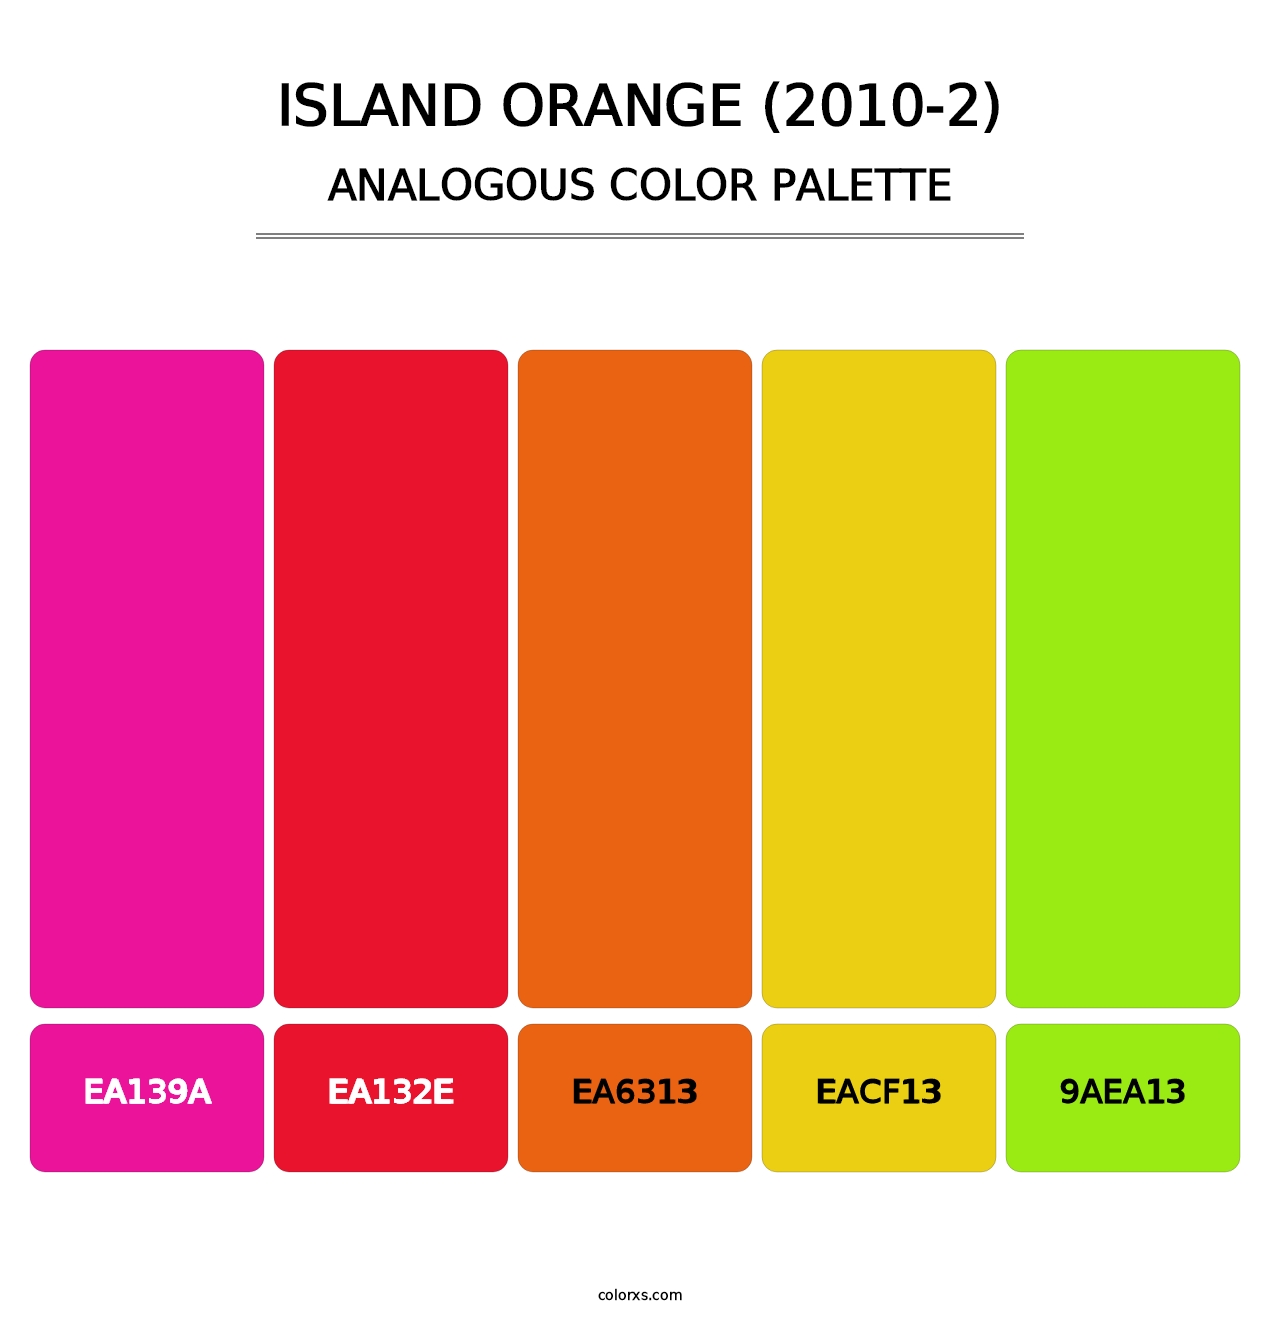 Island Orange (2010-2) - Analogous Color Palette